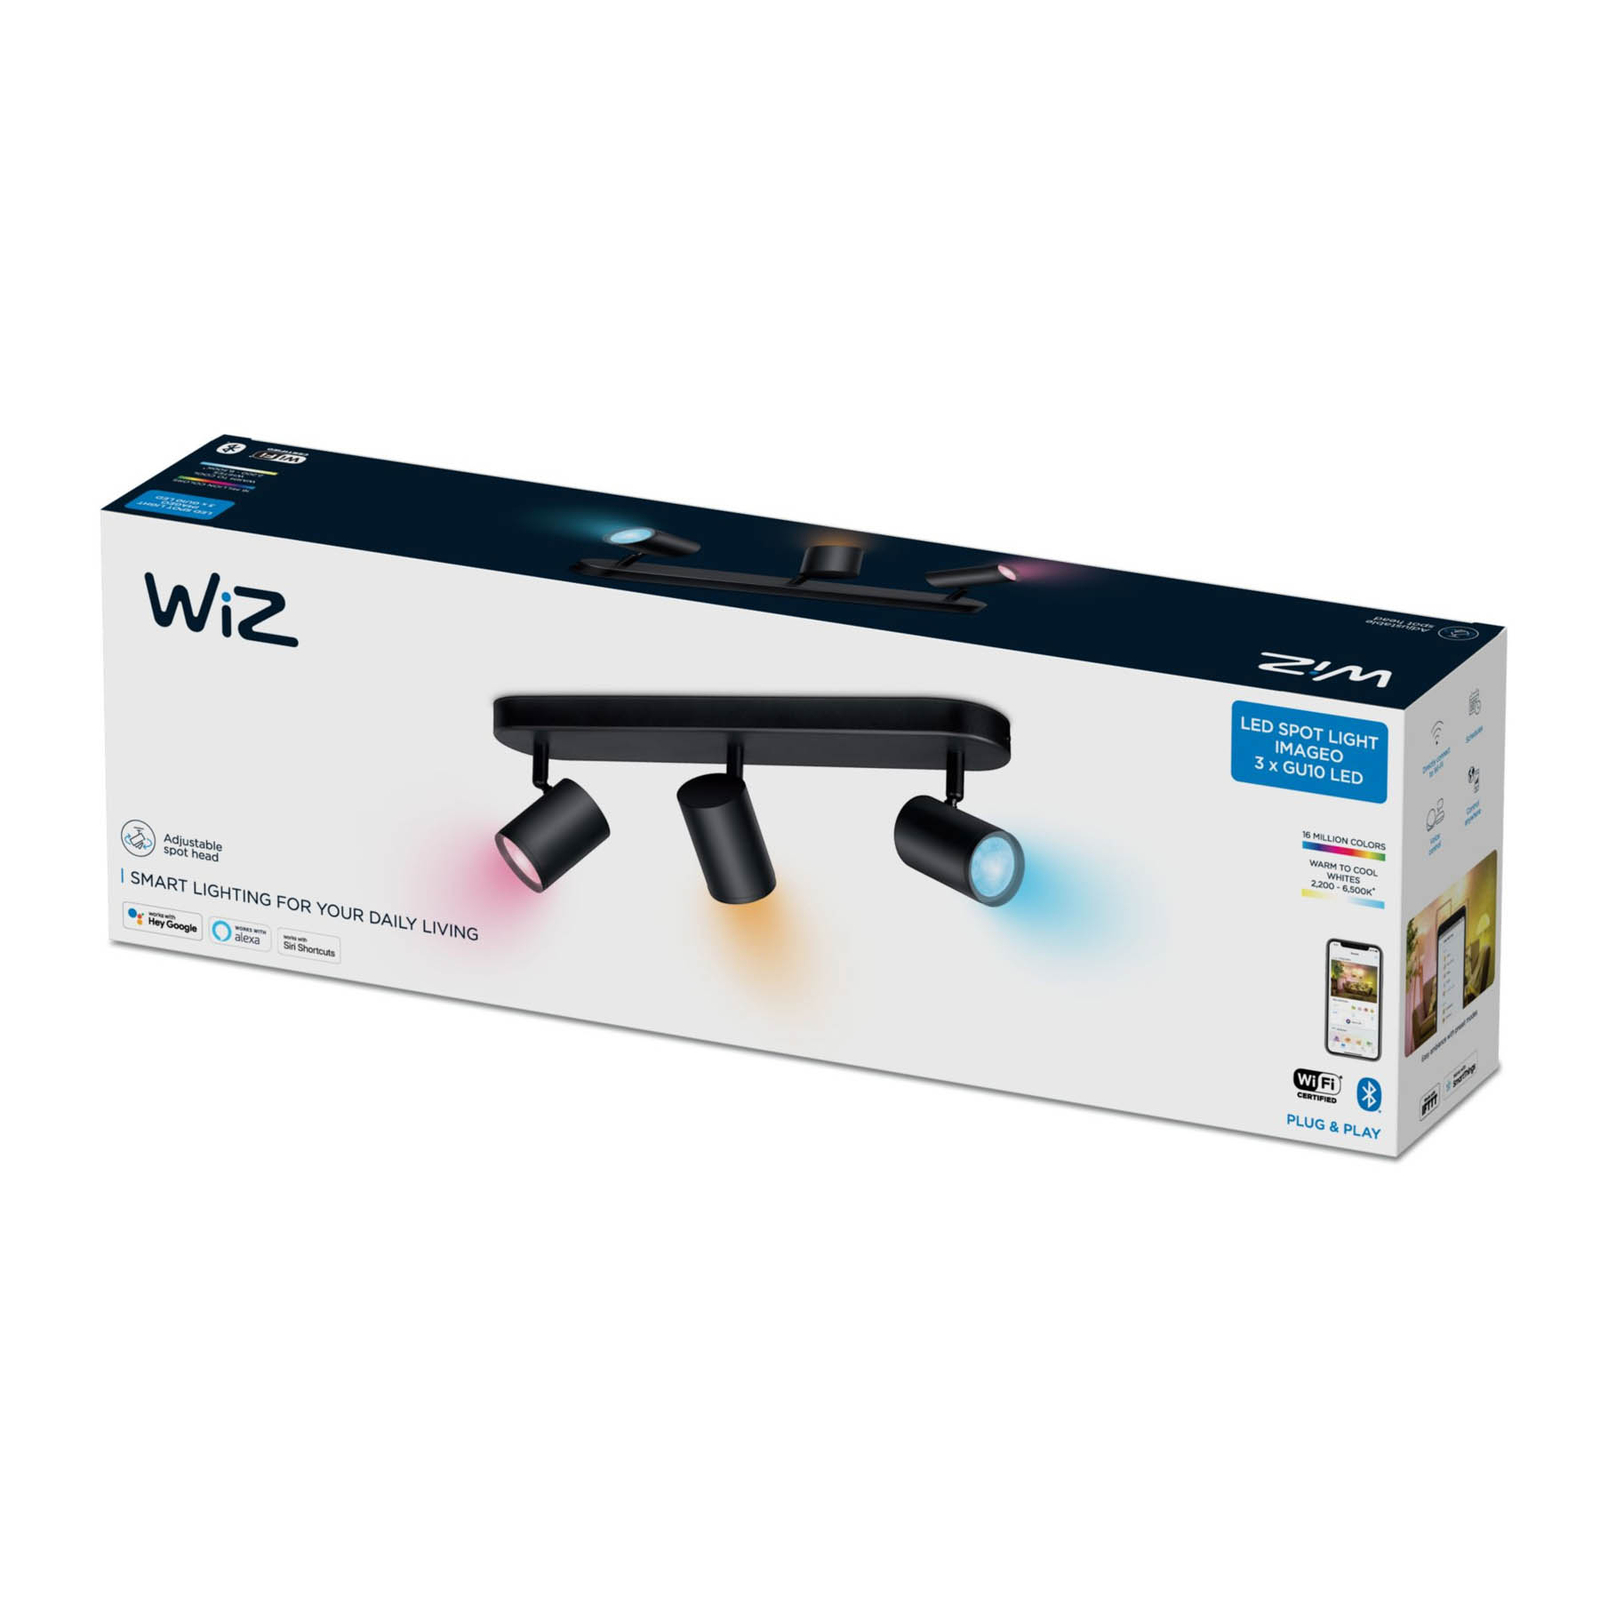 WiZ Imageo LED spot 3-bulb RGB, black